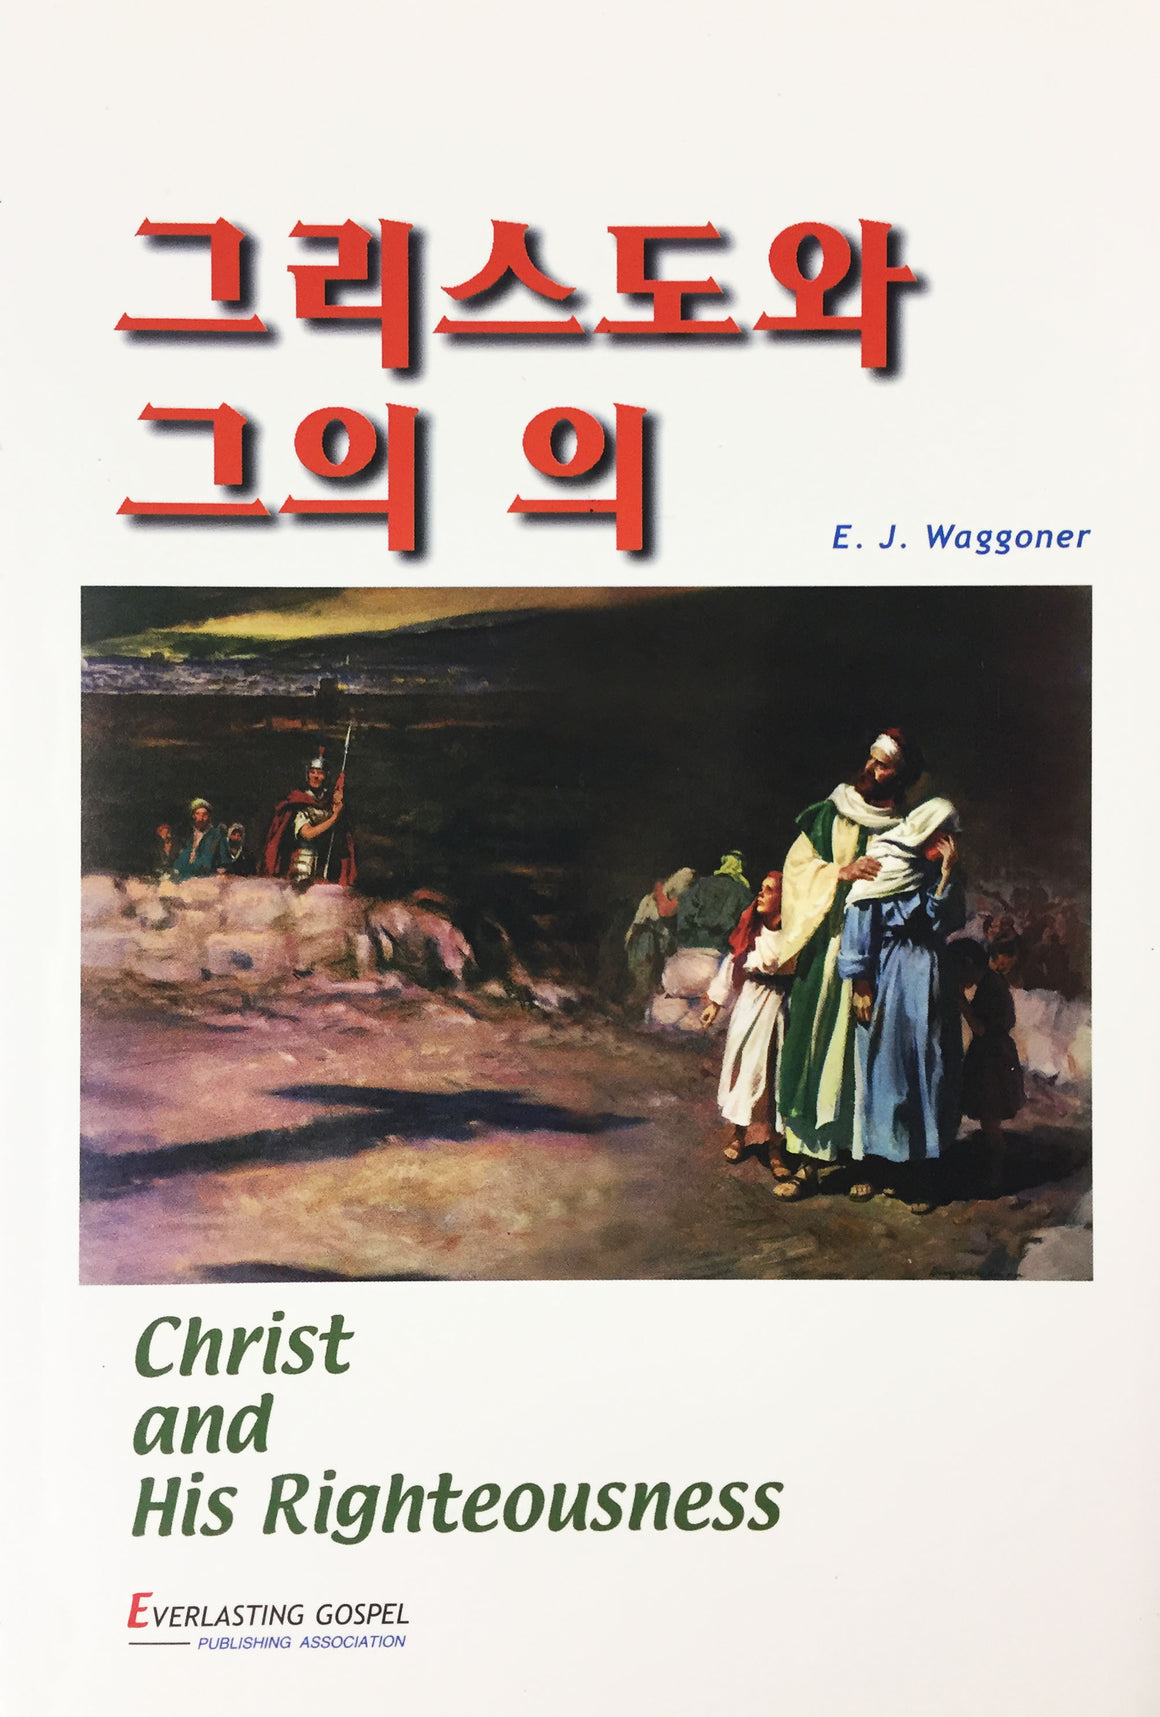 Christ and His Righteousness (Korean: 그리스도와 그의 의)